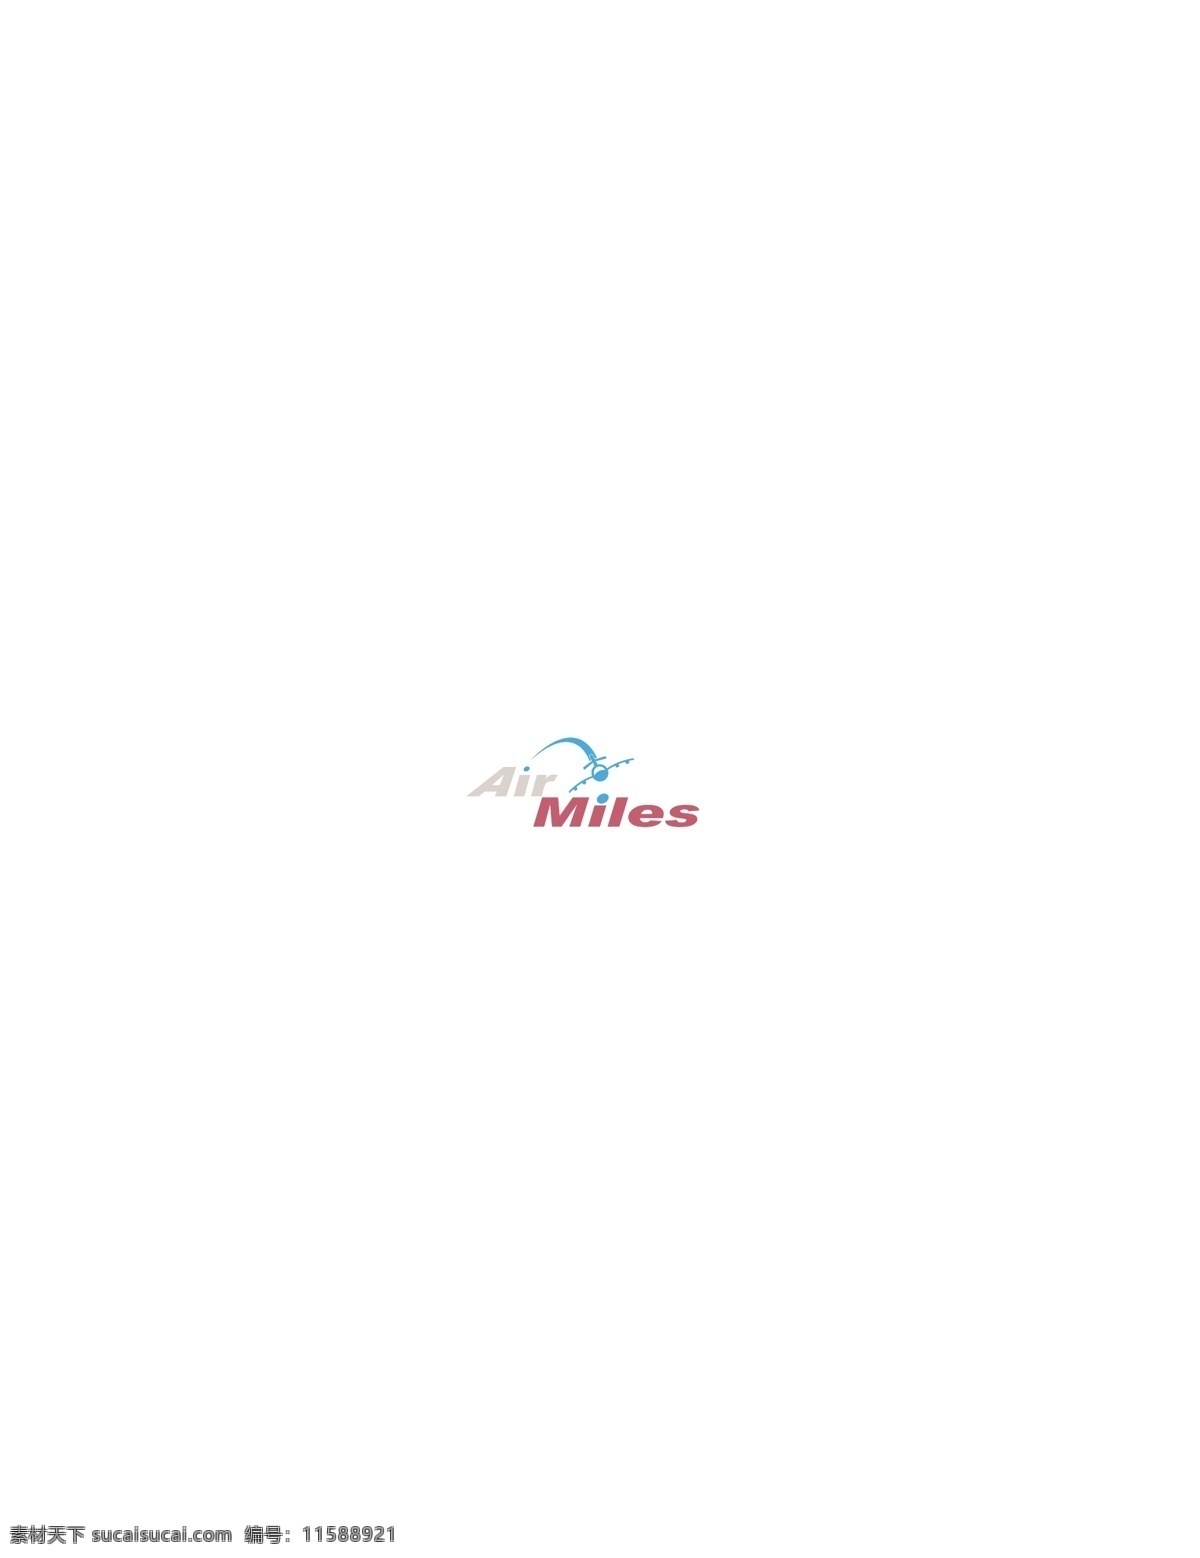 logo大全 logo 设计欣赏 商业矢量 矢量下载 airmiles 航空公司 标志设计 欣赏 网页矢量 矢量图 其他矢量图